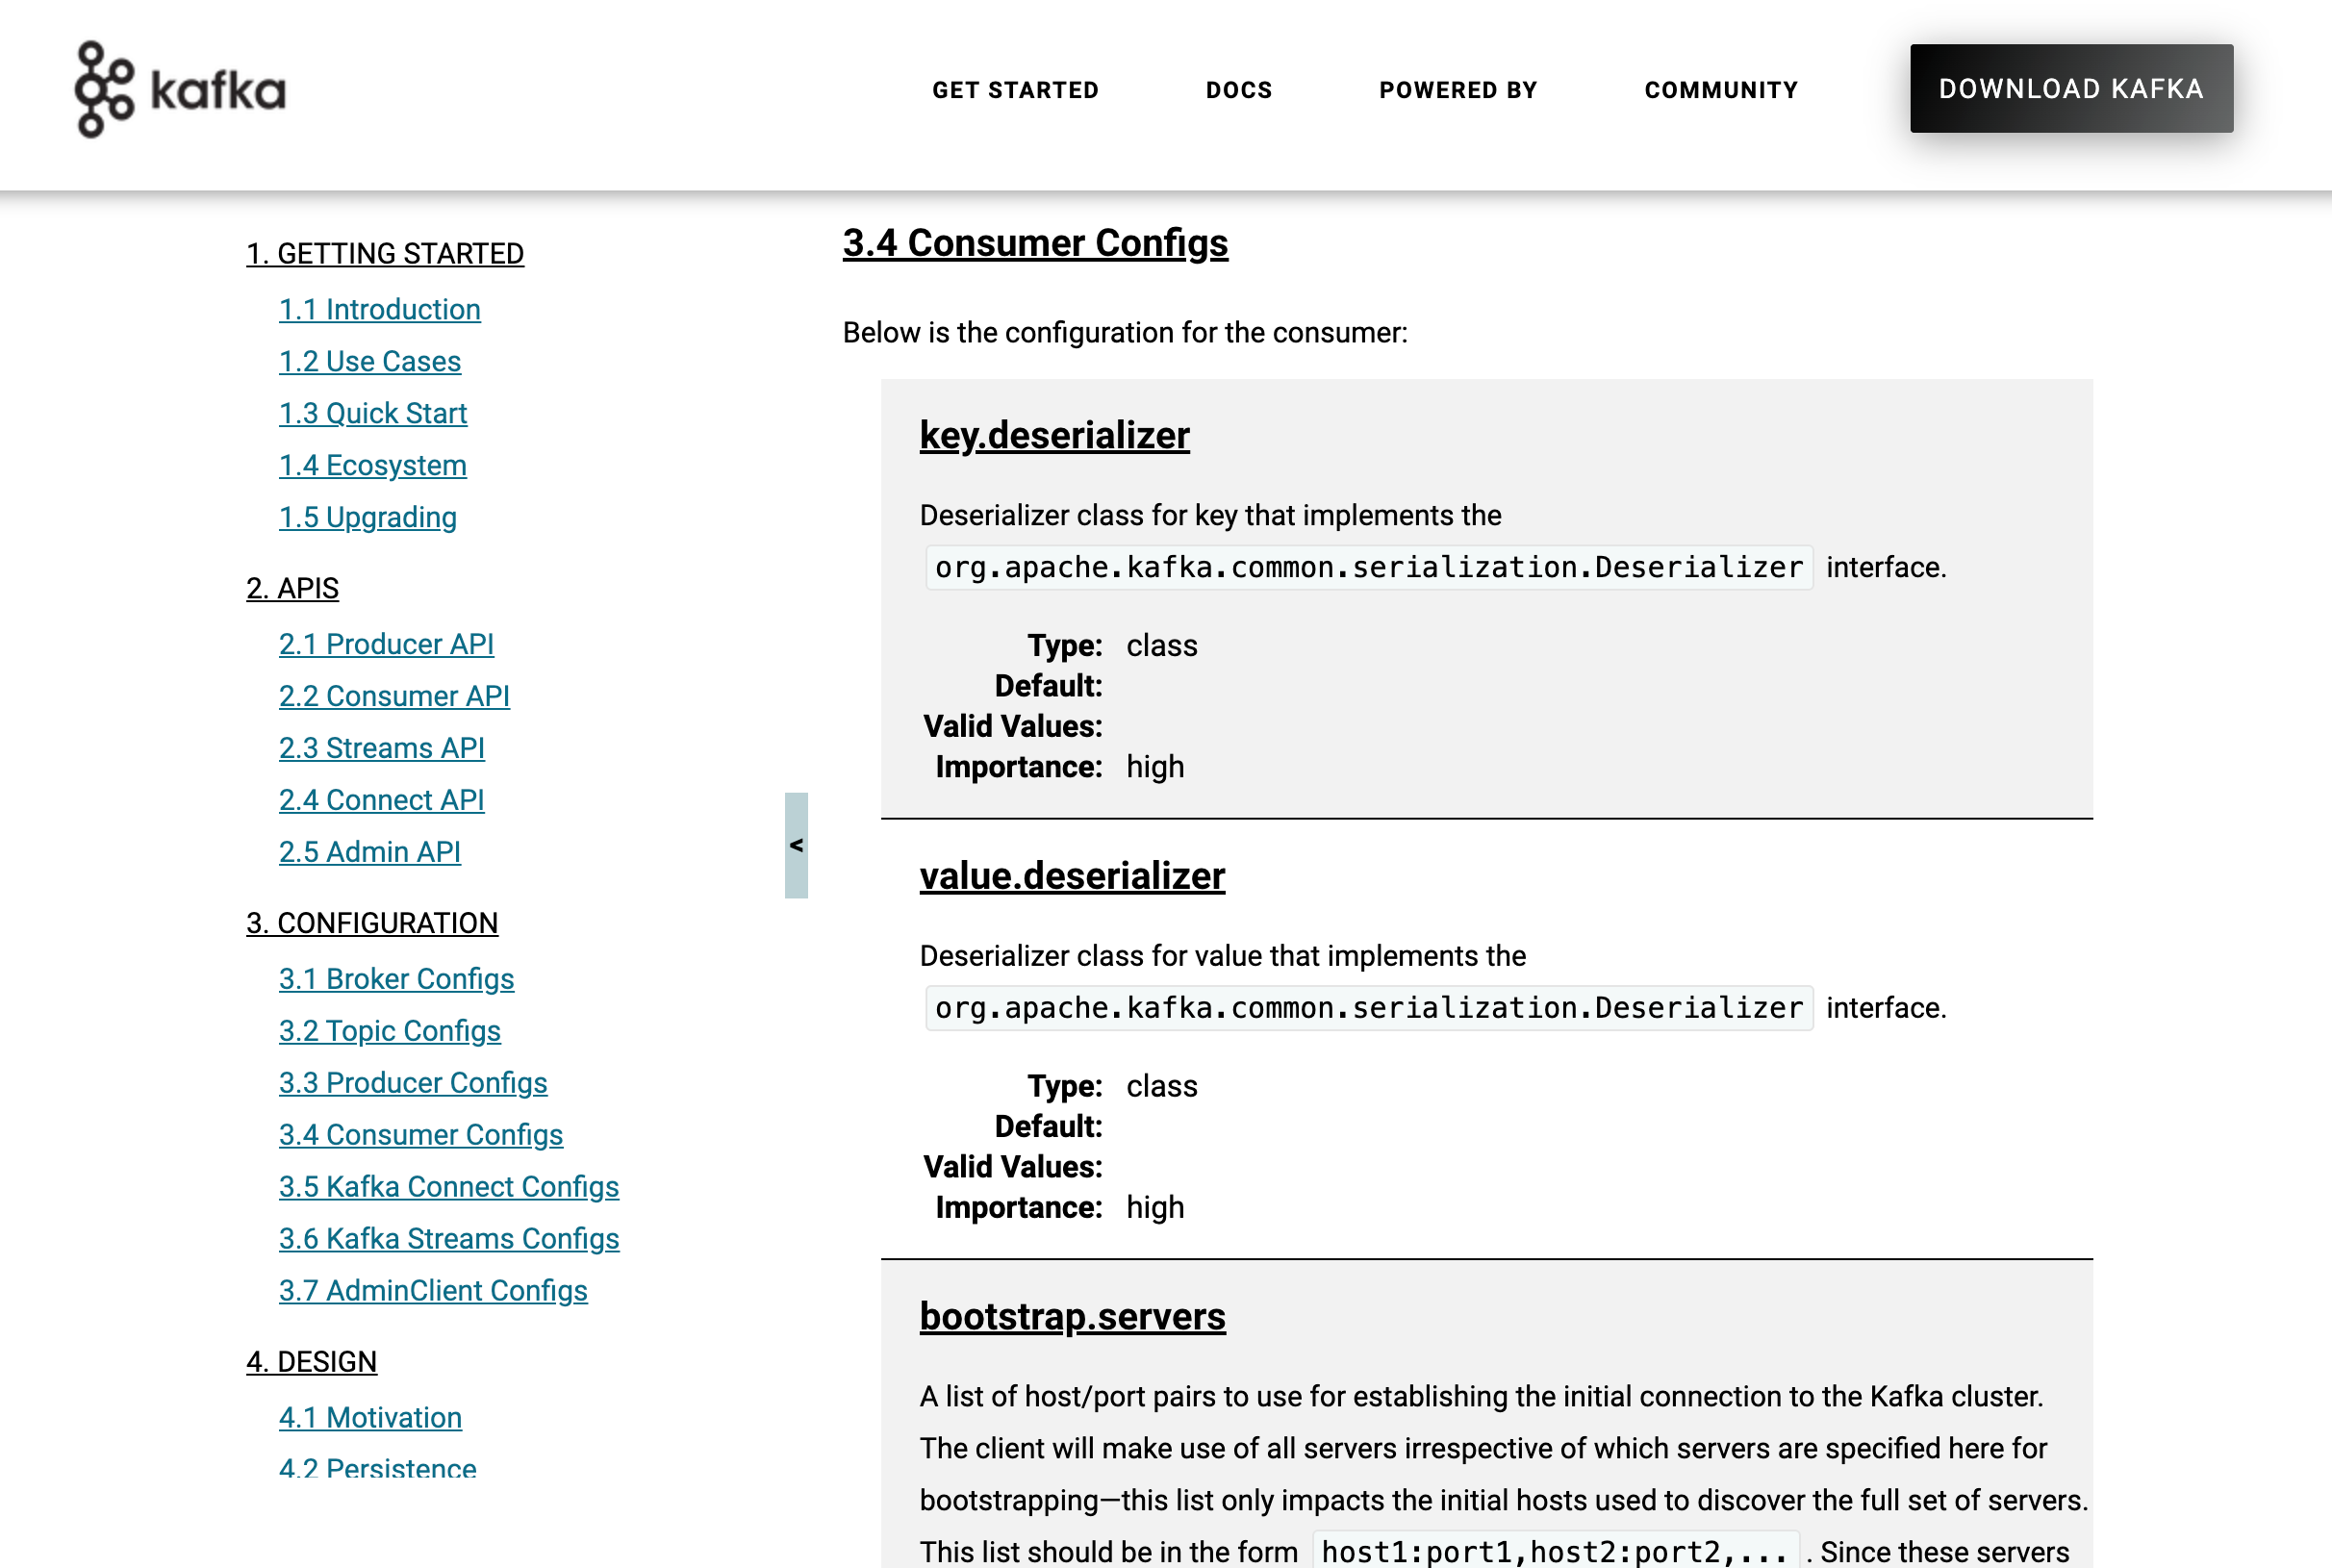 Screenshot showiong Kafka Consumer properties and configurations from apache.kafka.org